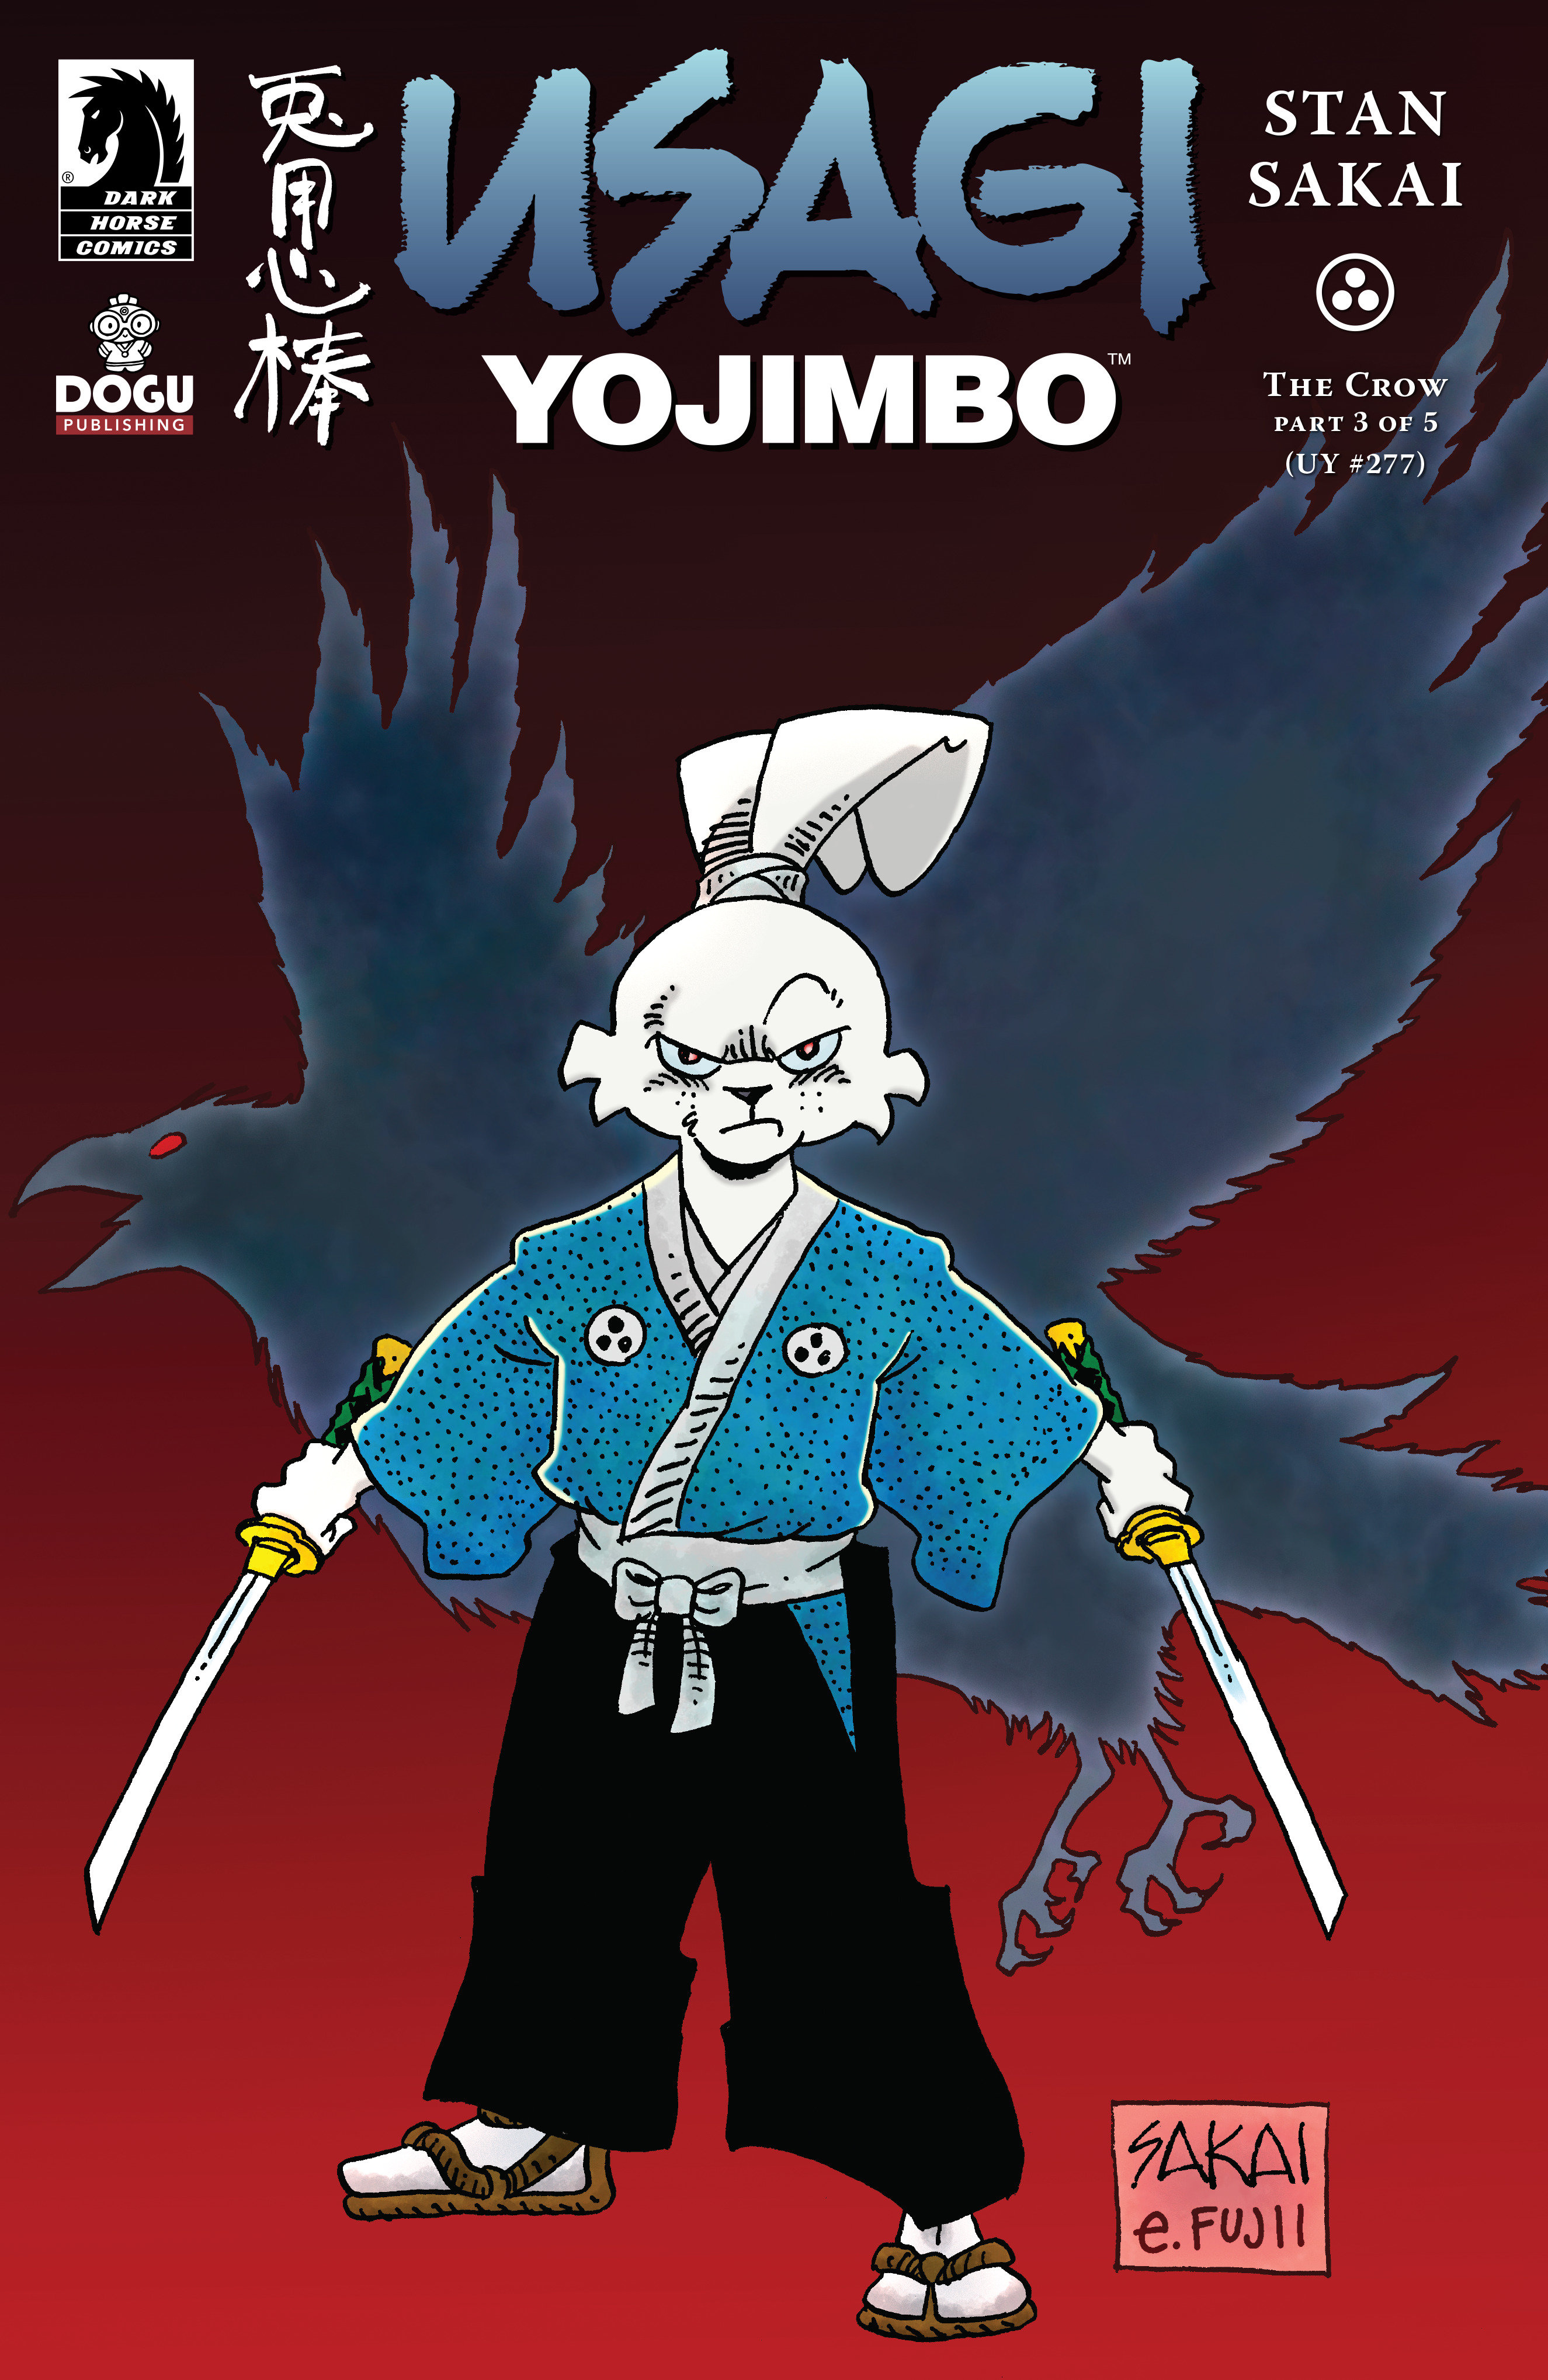 Usagi Yojimbo: The Crow #3 Cover A (Stan Sakai)